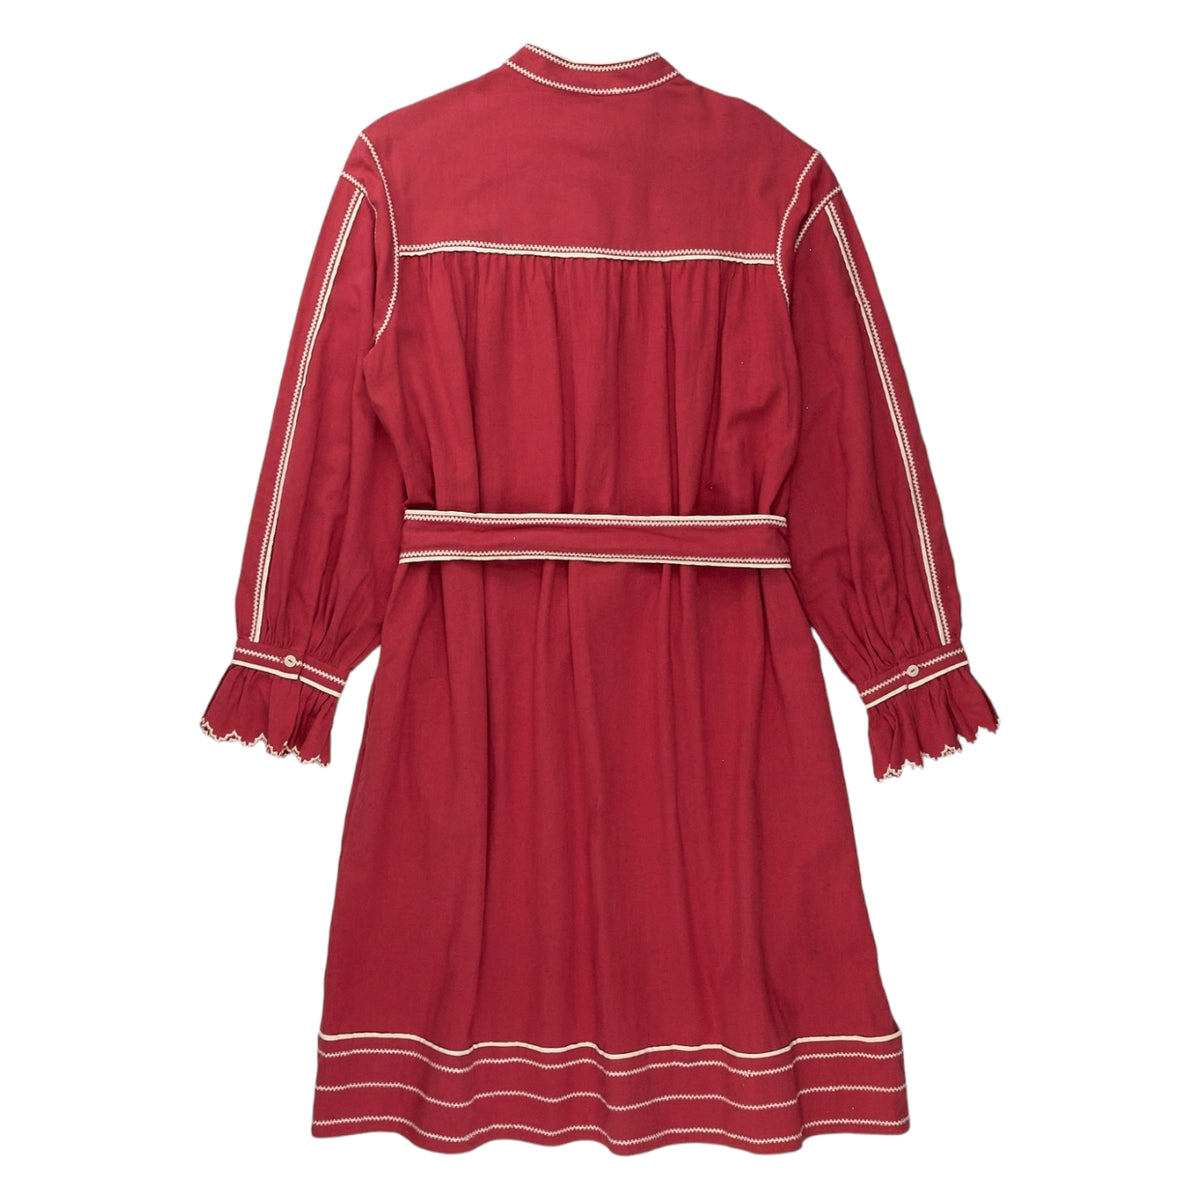 YMC Red Abery Cotton Dress